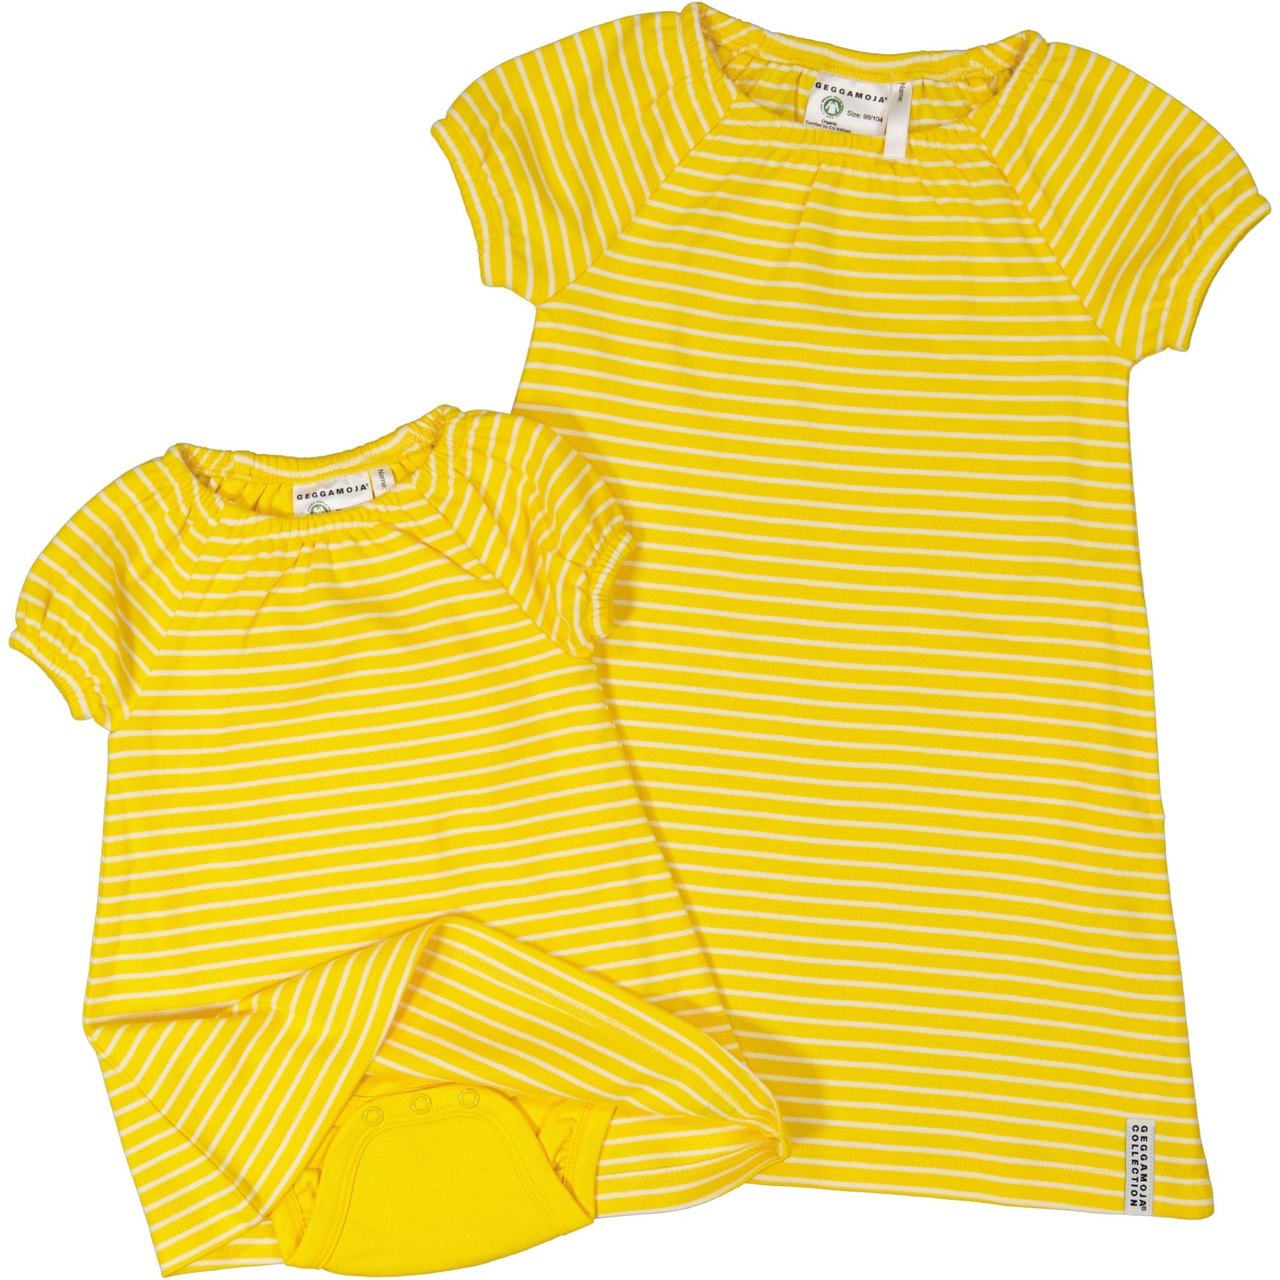 Singoalla dress Yellow/white  98/104